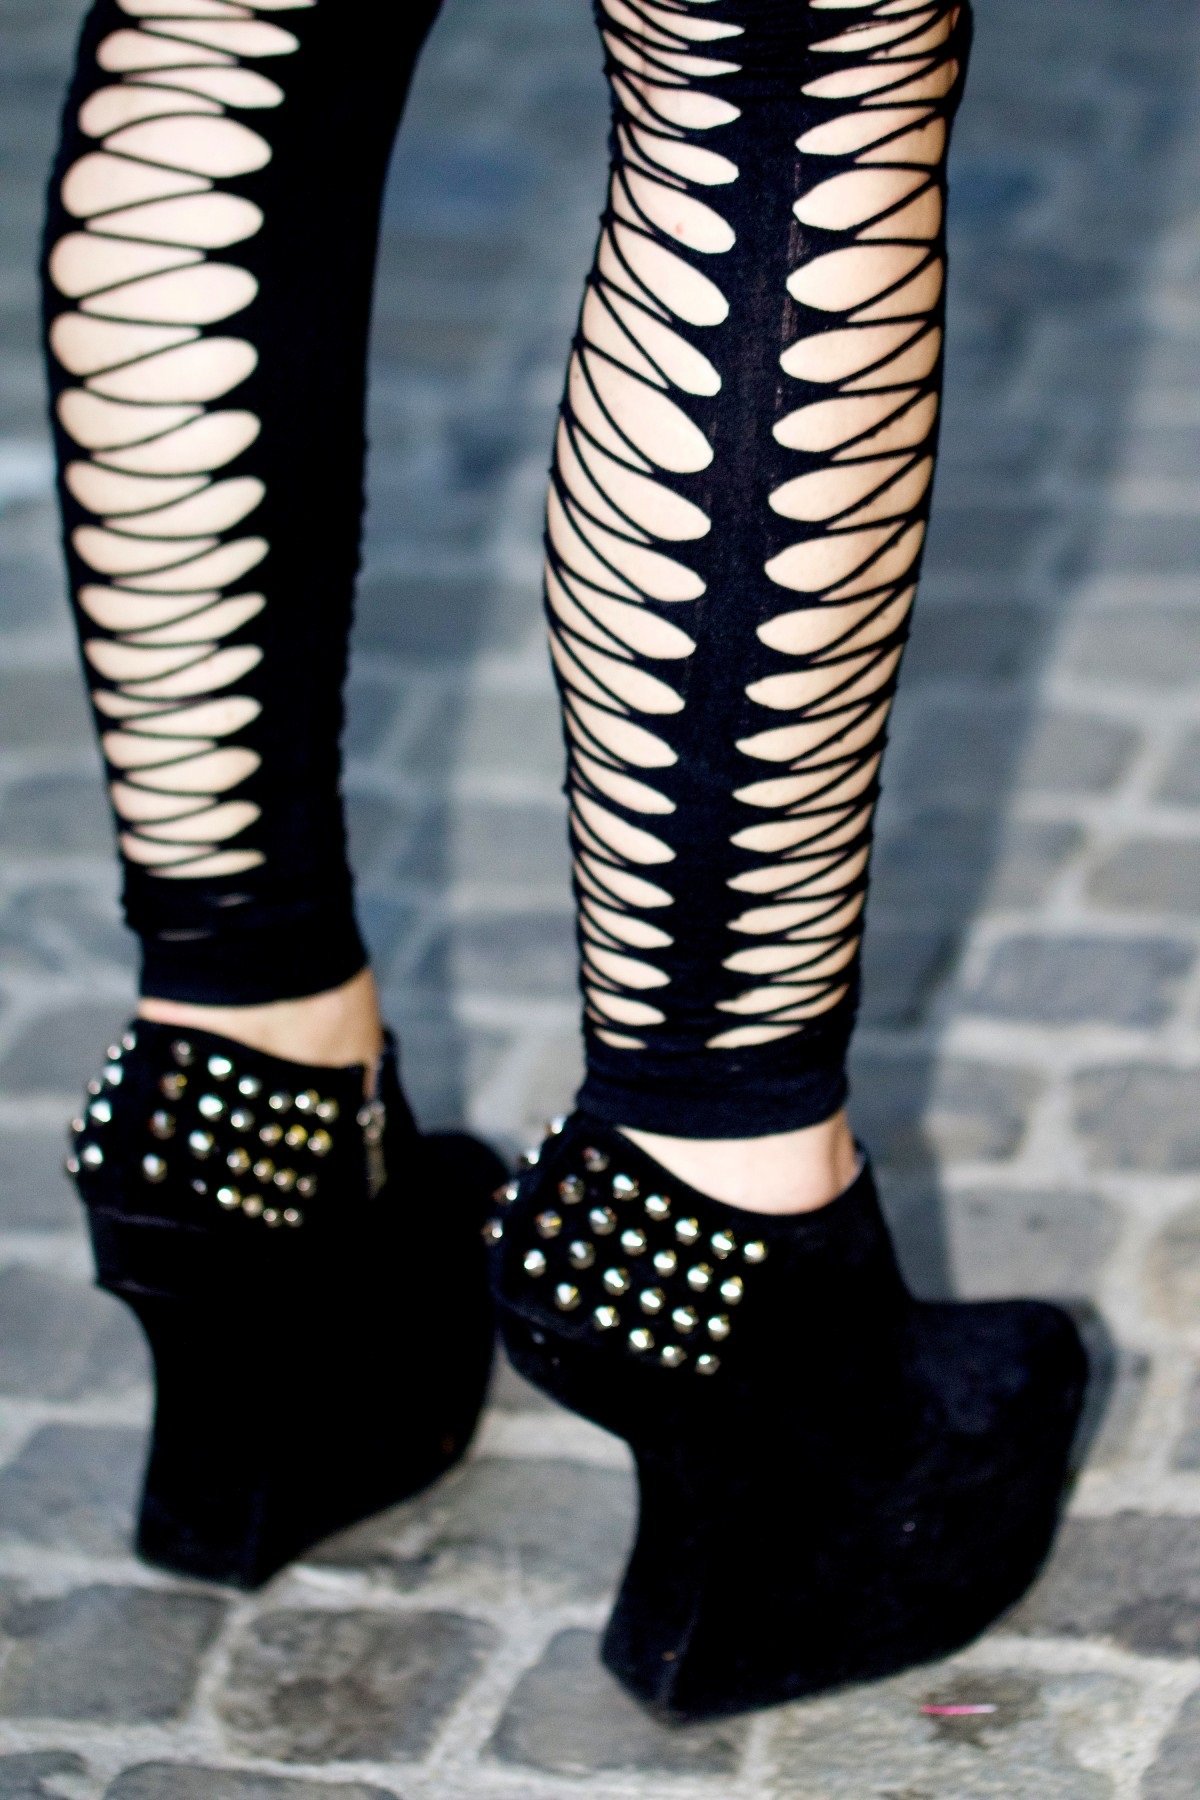 human_legs_clothing_fishnet_stockings_design_shoes_setting_stones-861822